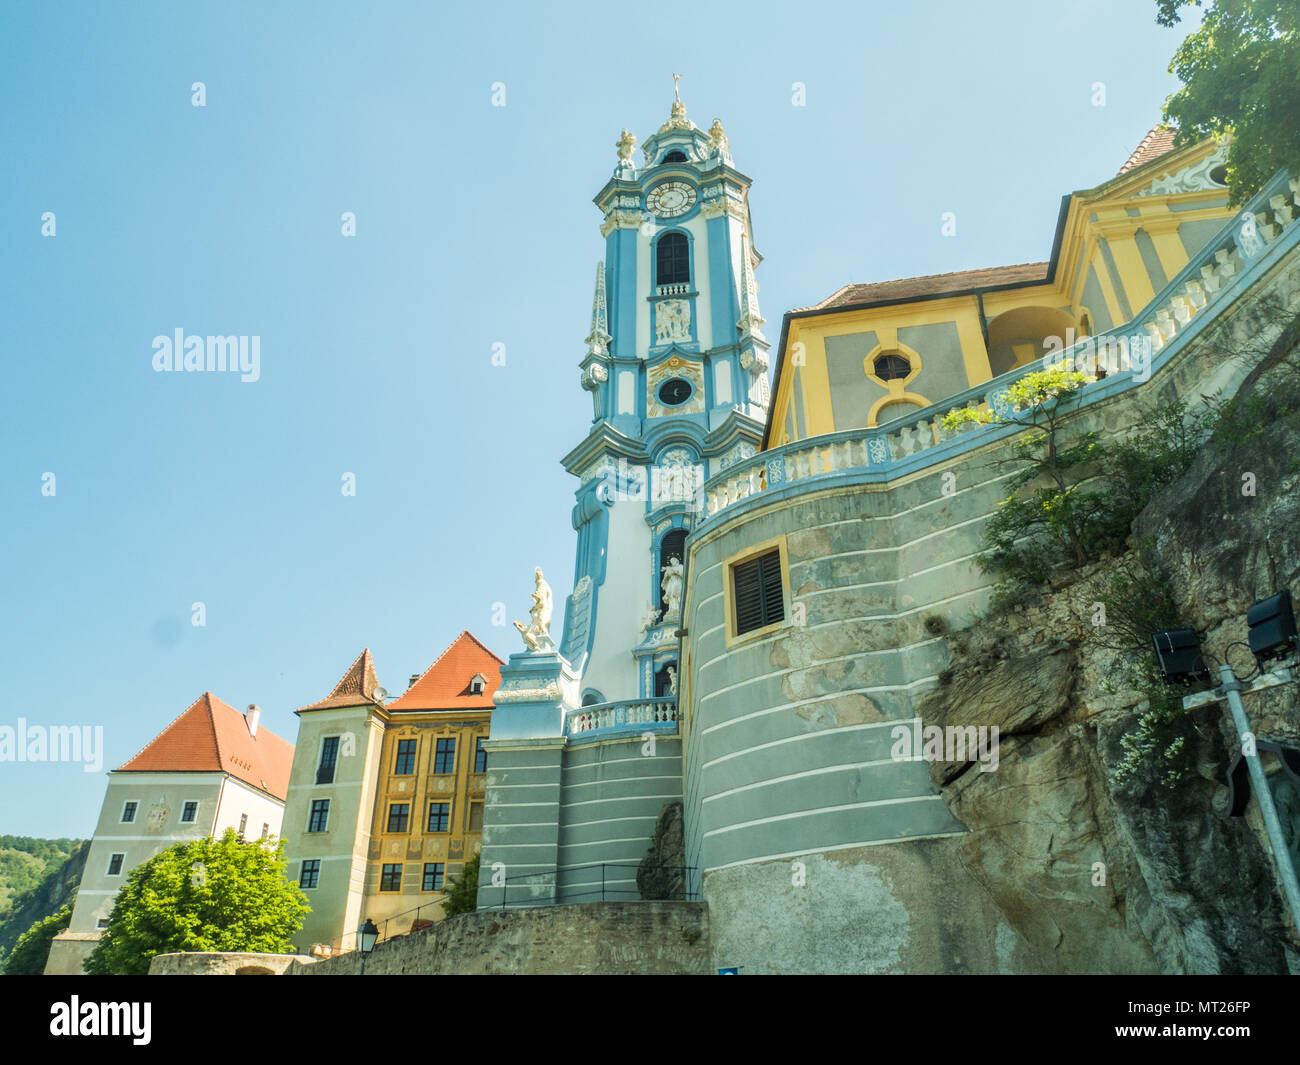 La parrocchia di blu chiesa abbaziale di Durnstein sul fiume Danubio, regione di Wachau, Austria. Foto Stock